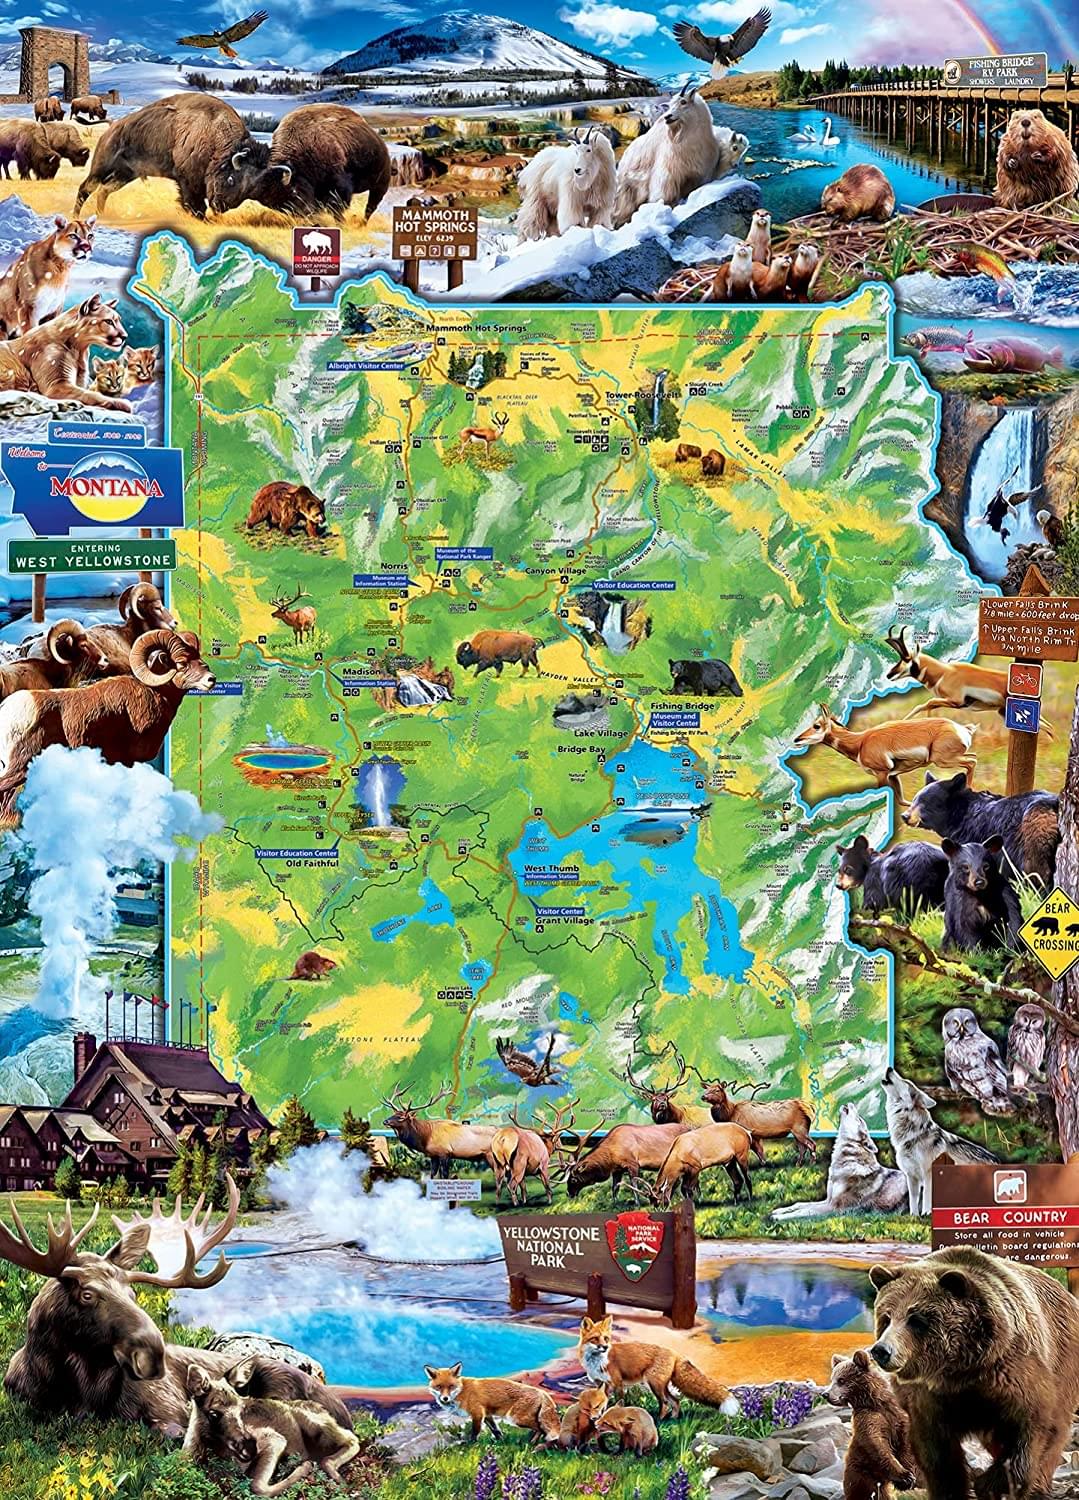 Yellowstone National Park 1000 Piece Jigsaw Puzzle